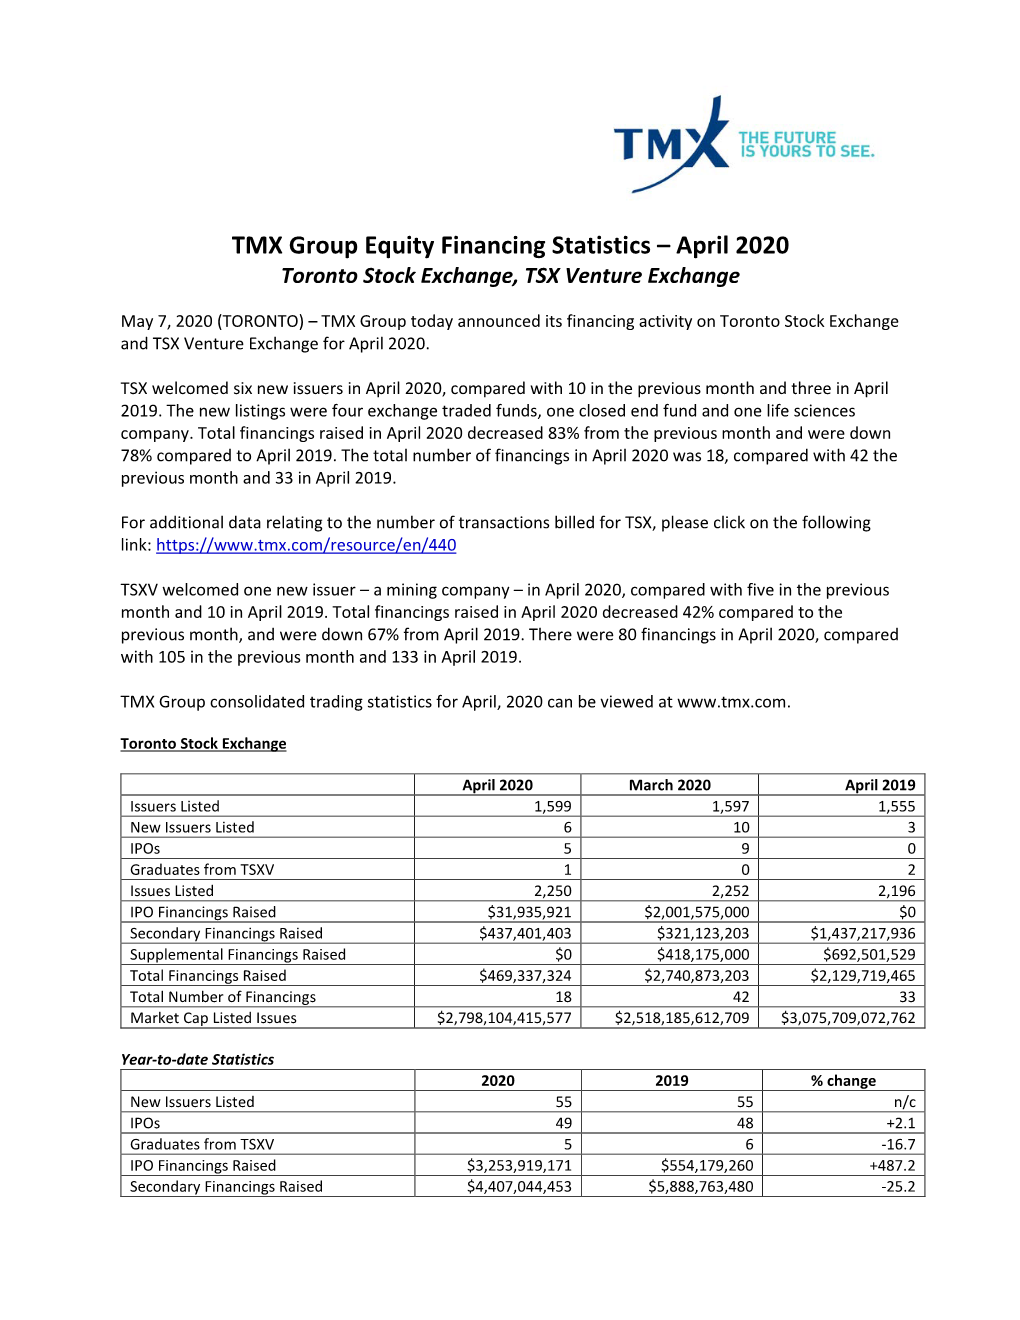 TMX Group Equity Financing Statistics – April 2020 Toronto Stock Exchange, TSX Venture Exchange